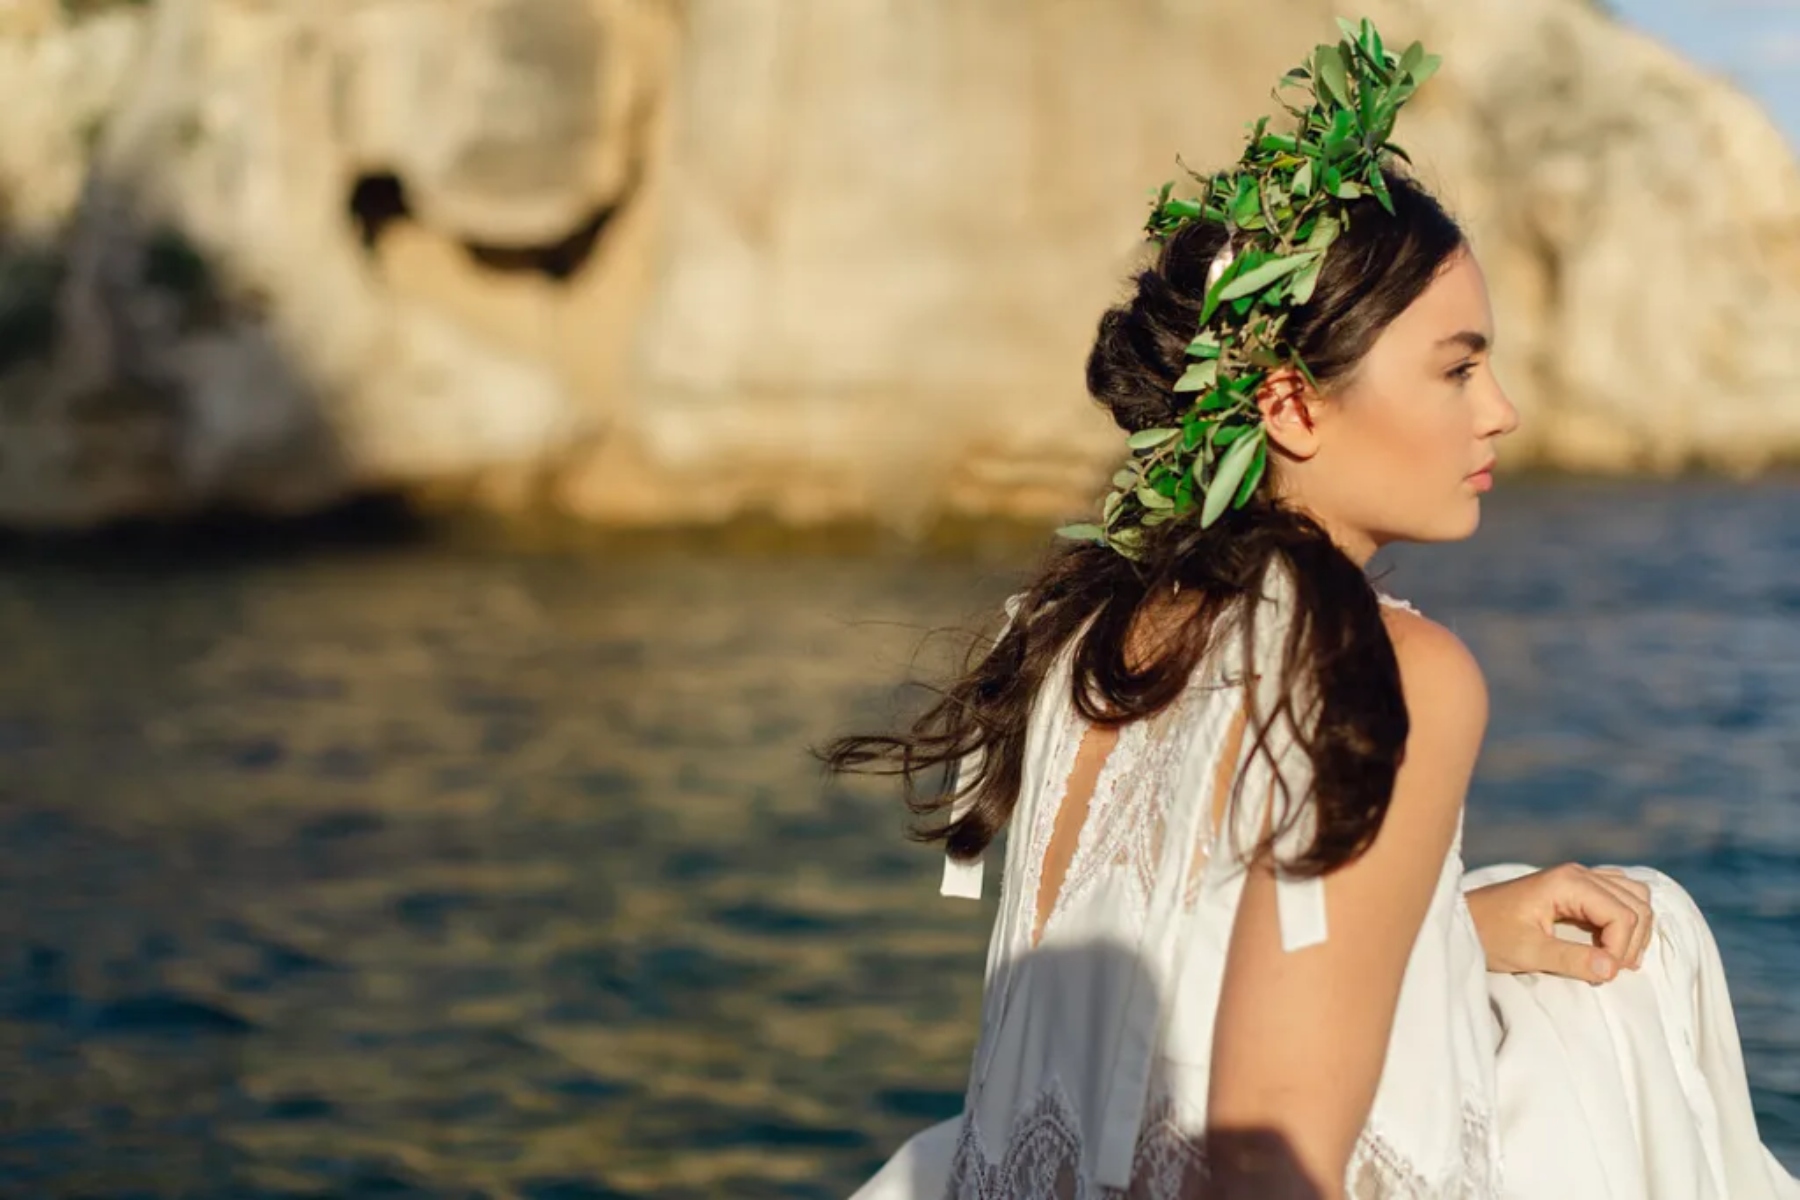 Beauty tips: Οι 5 κορυφαίες συμβουλές ομορφιάς από την Αρχαία Ελλάδα